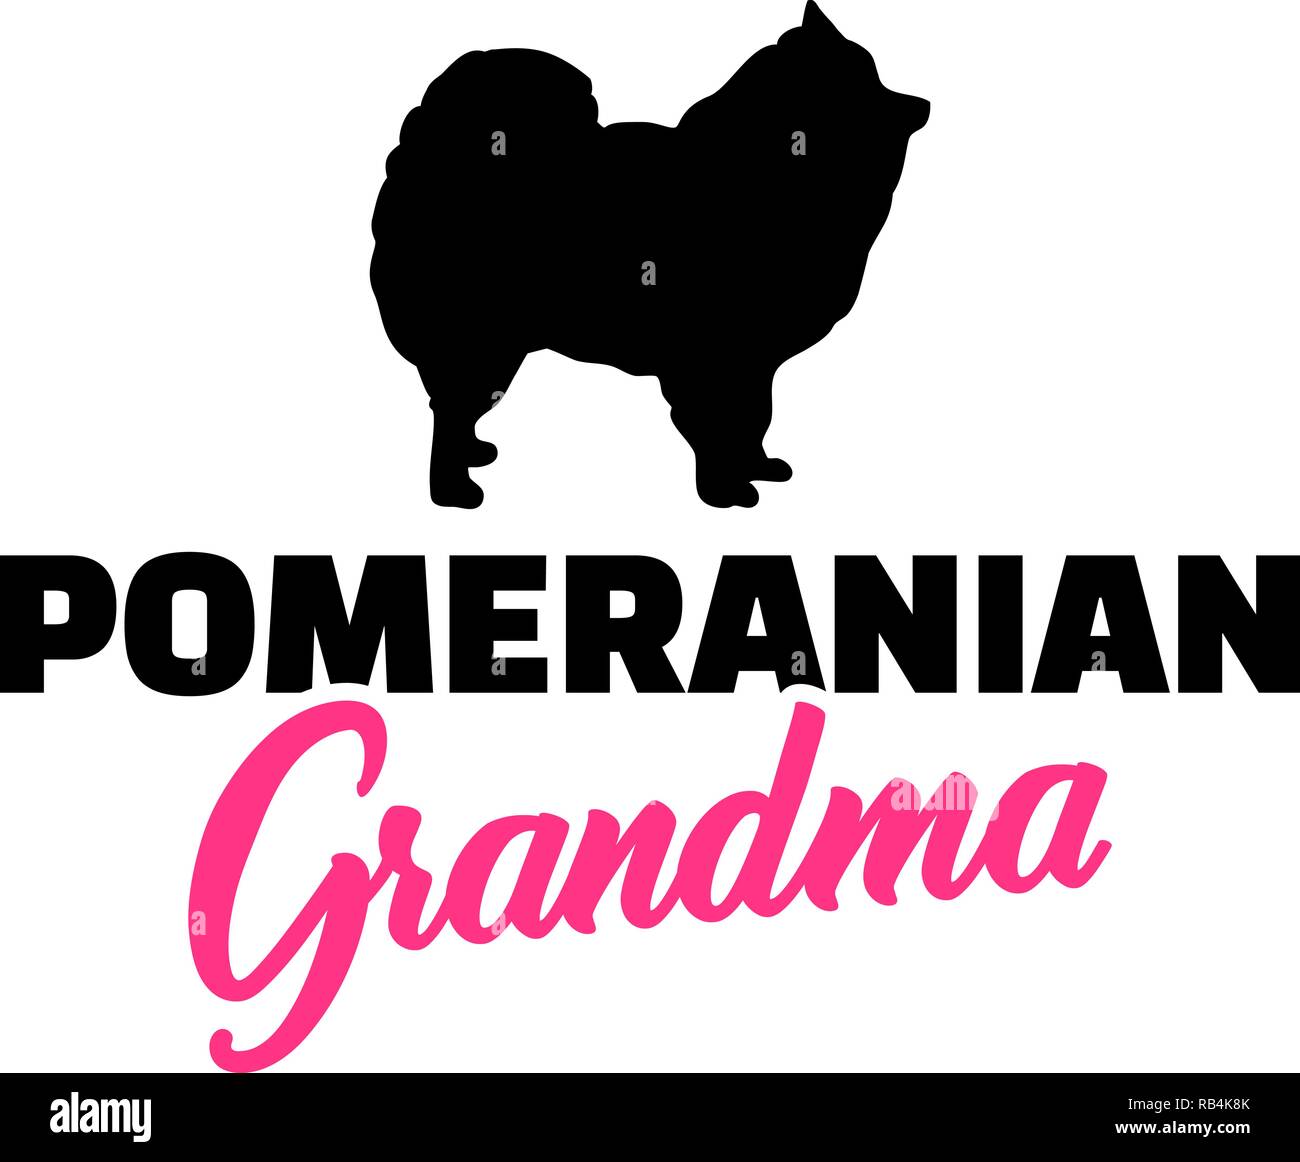 Pomeranian Grandma silhouette rosa Wort Stock Vektor